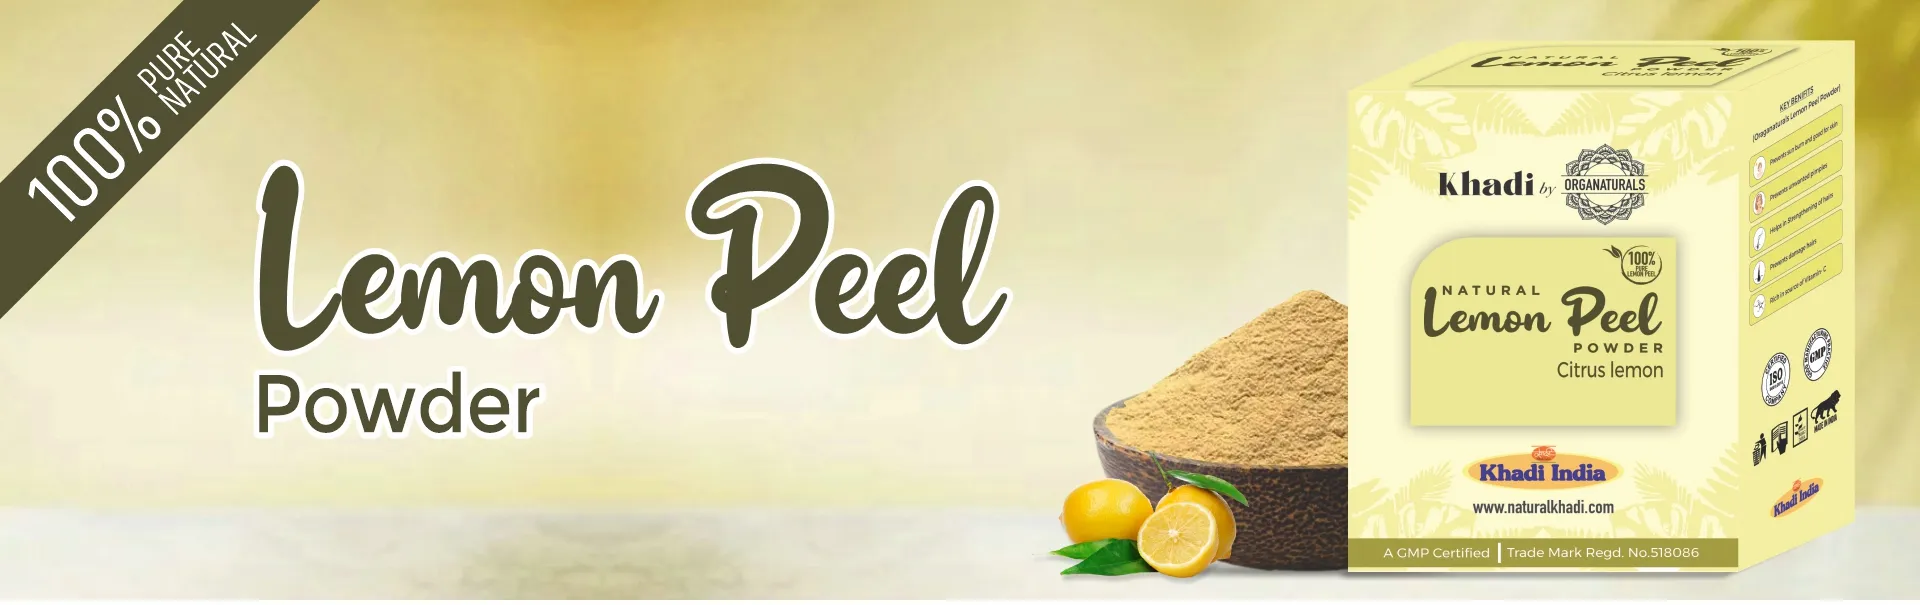 Lemon Peel Powder - www.dkihenna.com